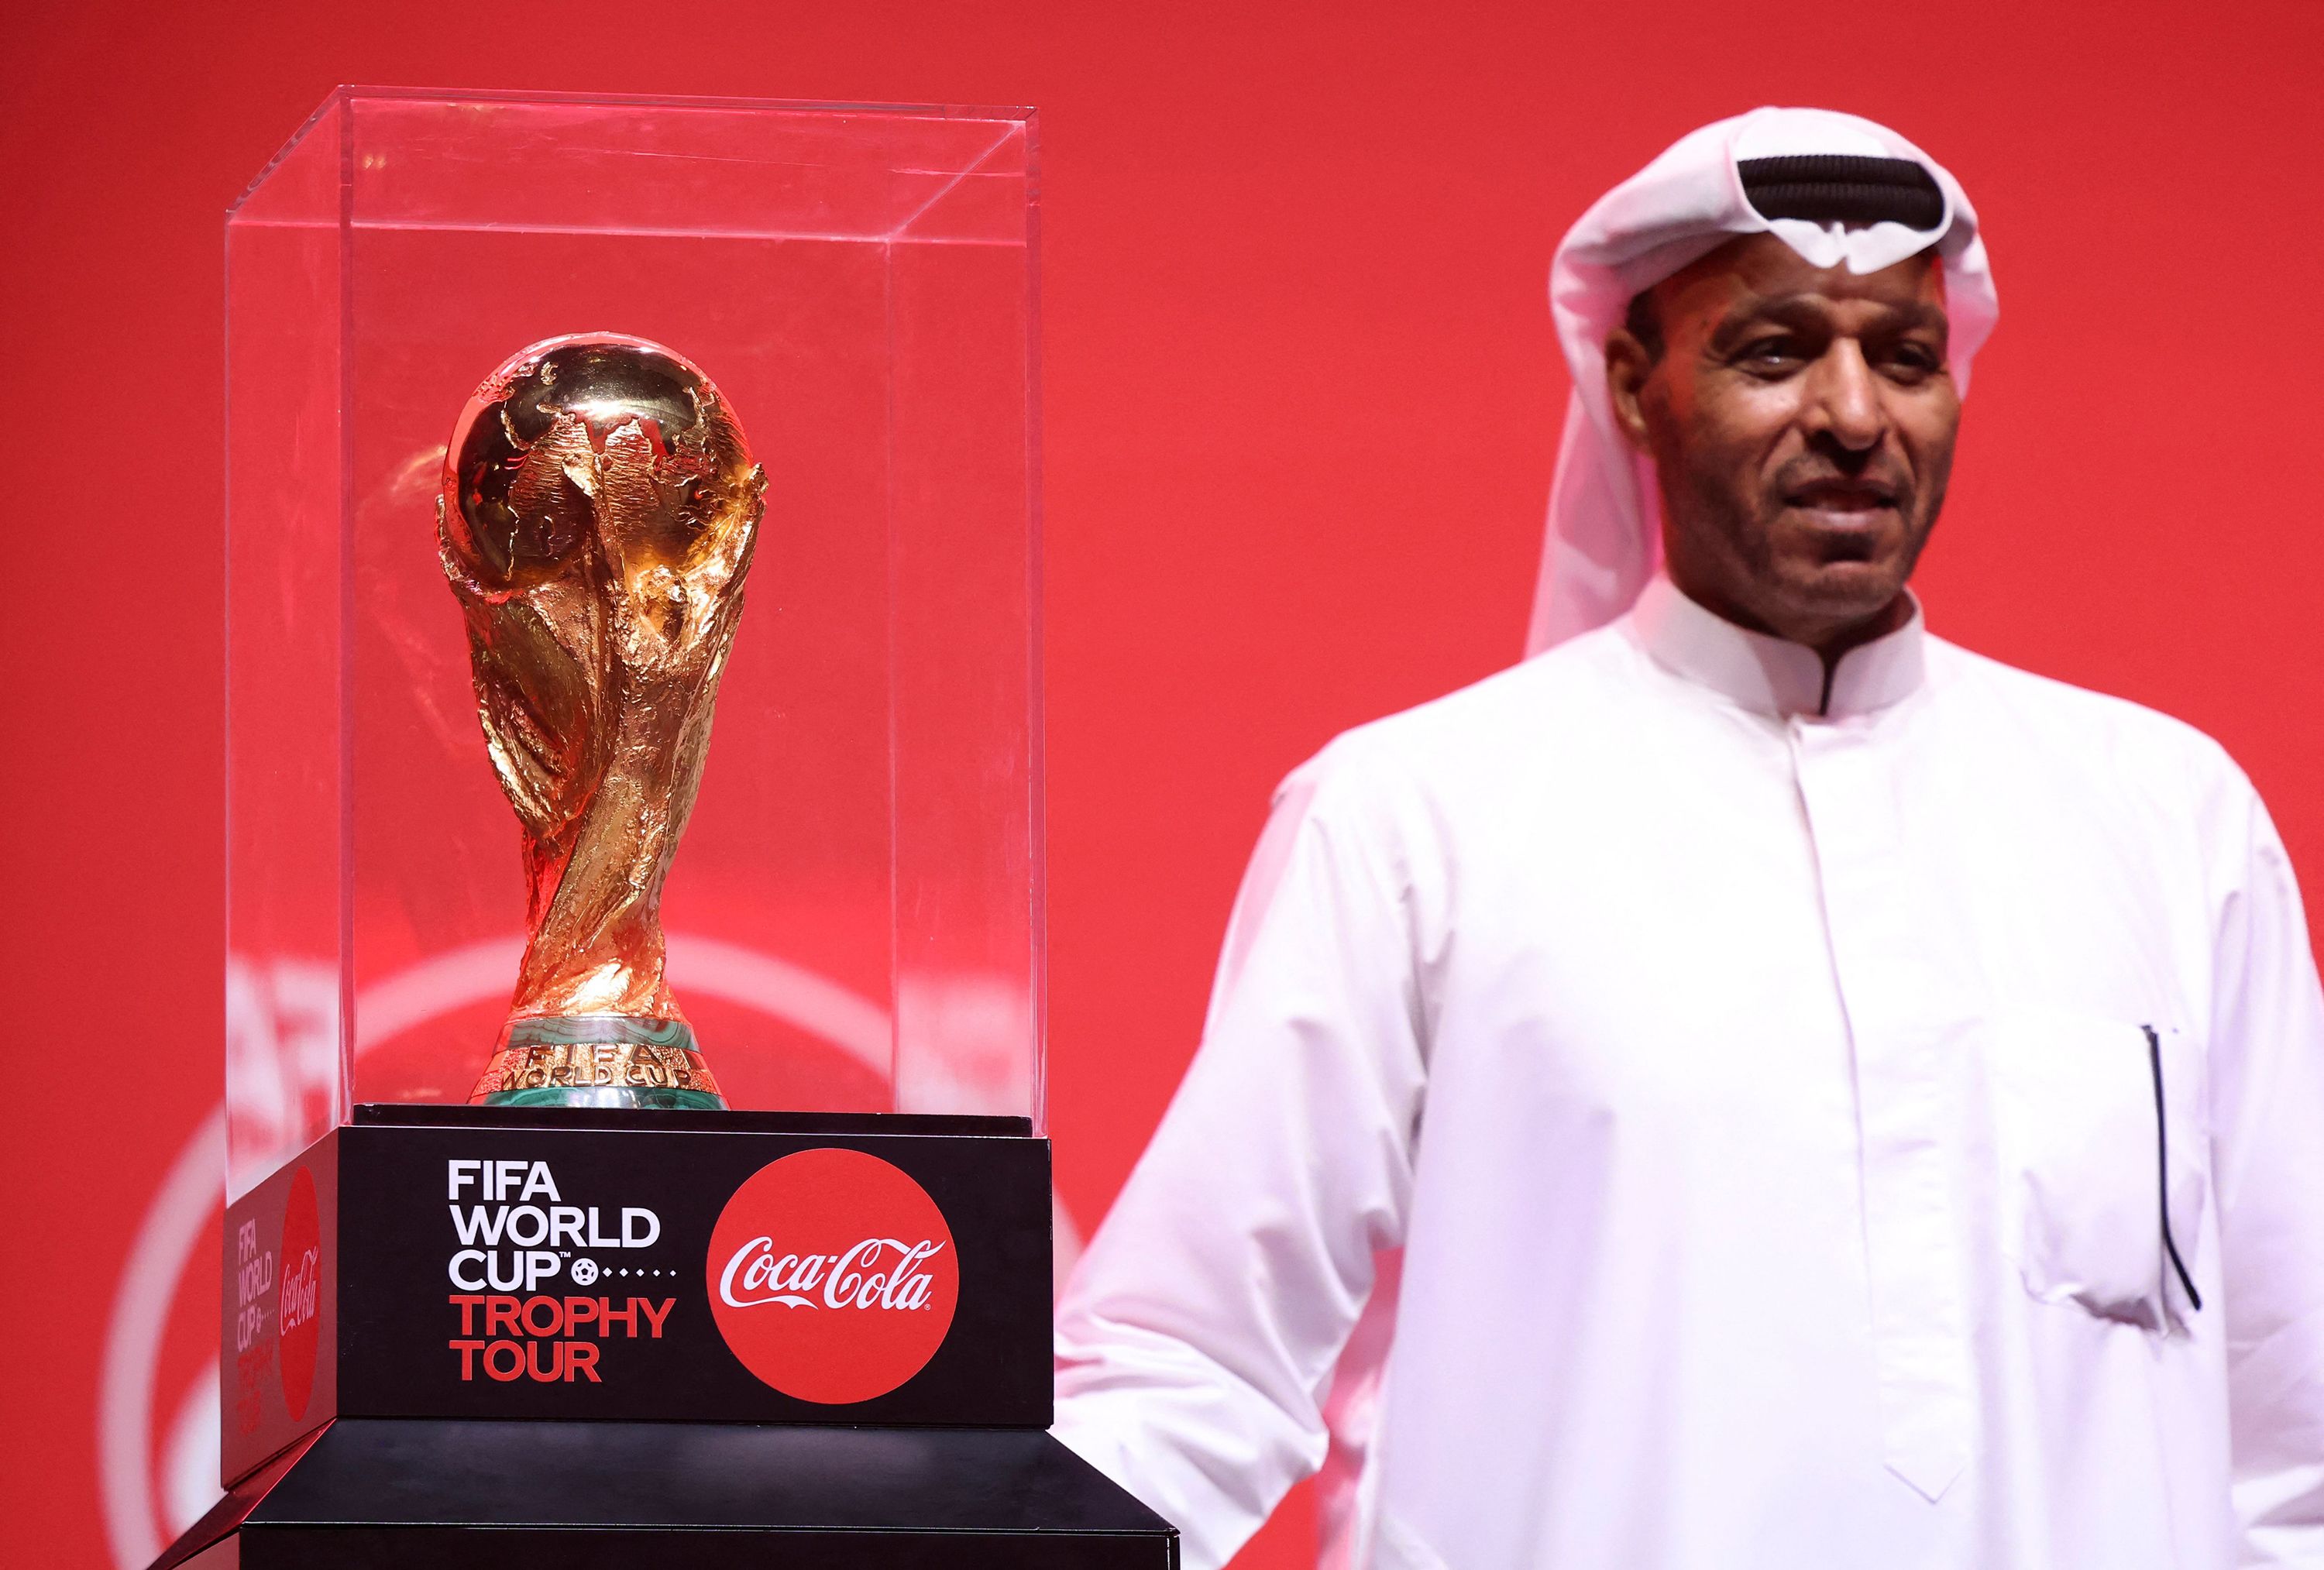 https://media.cnn.com/api/v1/images/stellar/prod/221215124953-qatar-world-cup-coca-cola.jpg?c=original